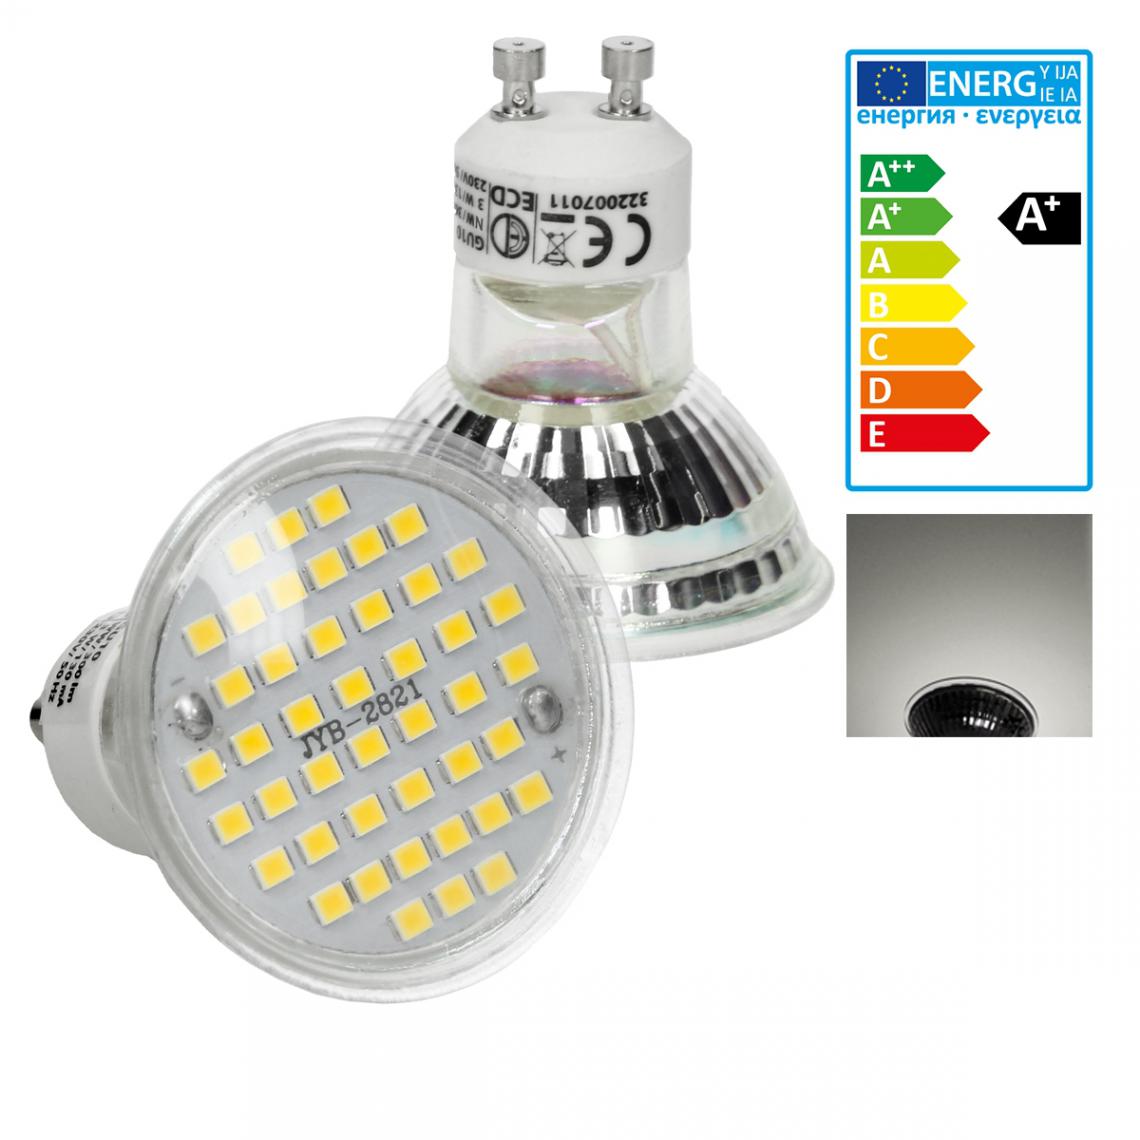 Ecd Germany - ECD Germany 5 x LED GU10 44SMD Spot 3W - Lampe à LED 20W - en verre - 251 lumens - Blanc neutre 4000K - Spot à encastrer - Ampoules LED